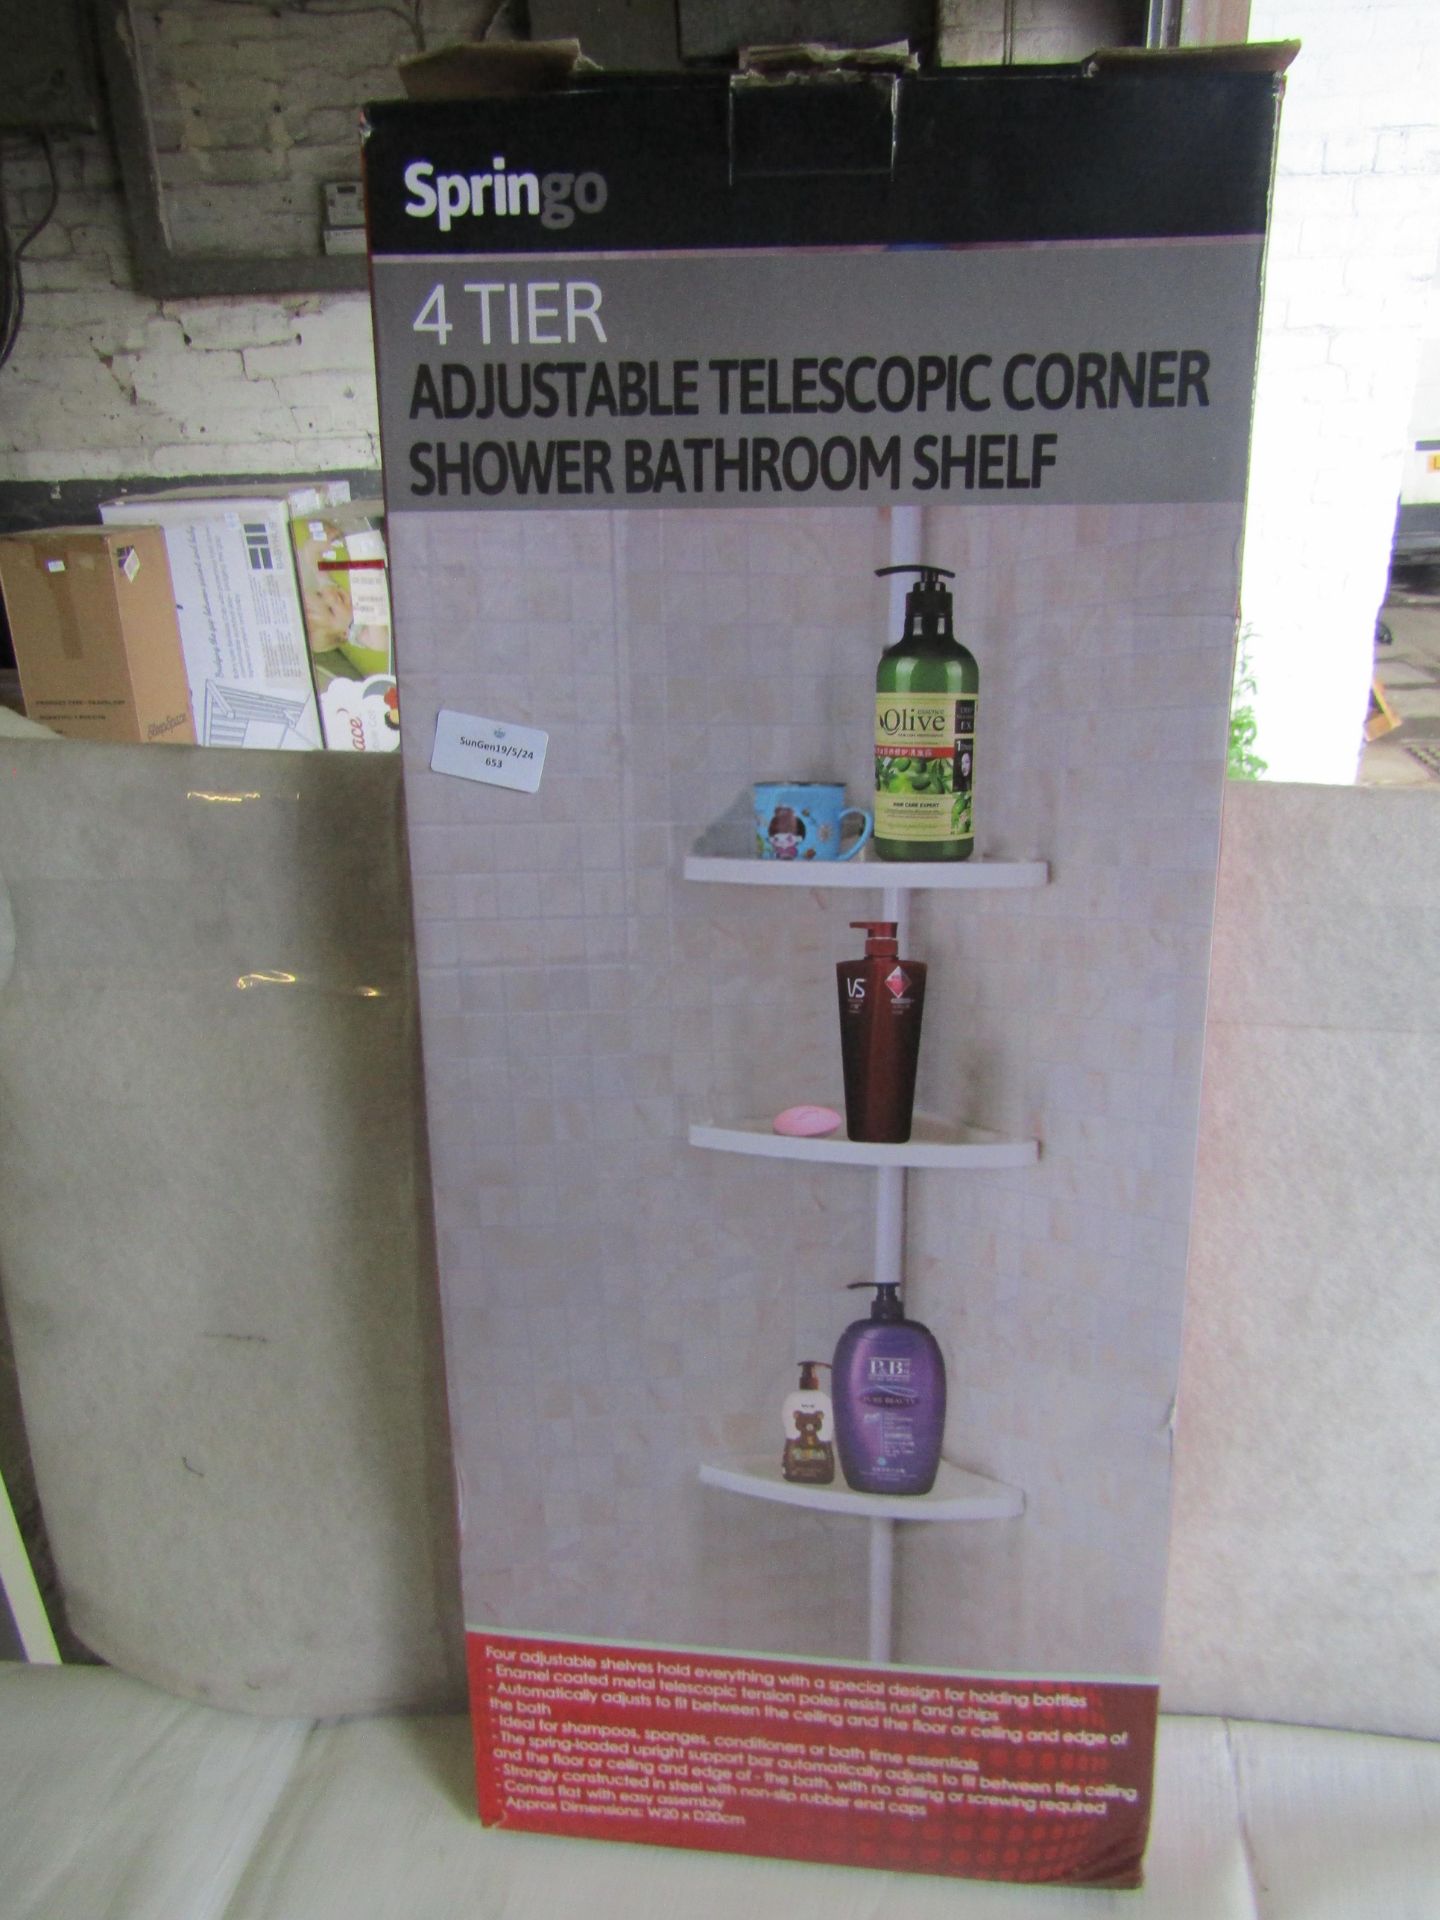 Springo 4-Tier Telescopic Corner Shower Bathroom Shelf, Size: W20xD20cm - Unchecked & Boxed.